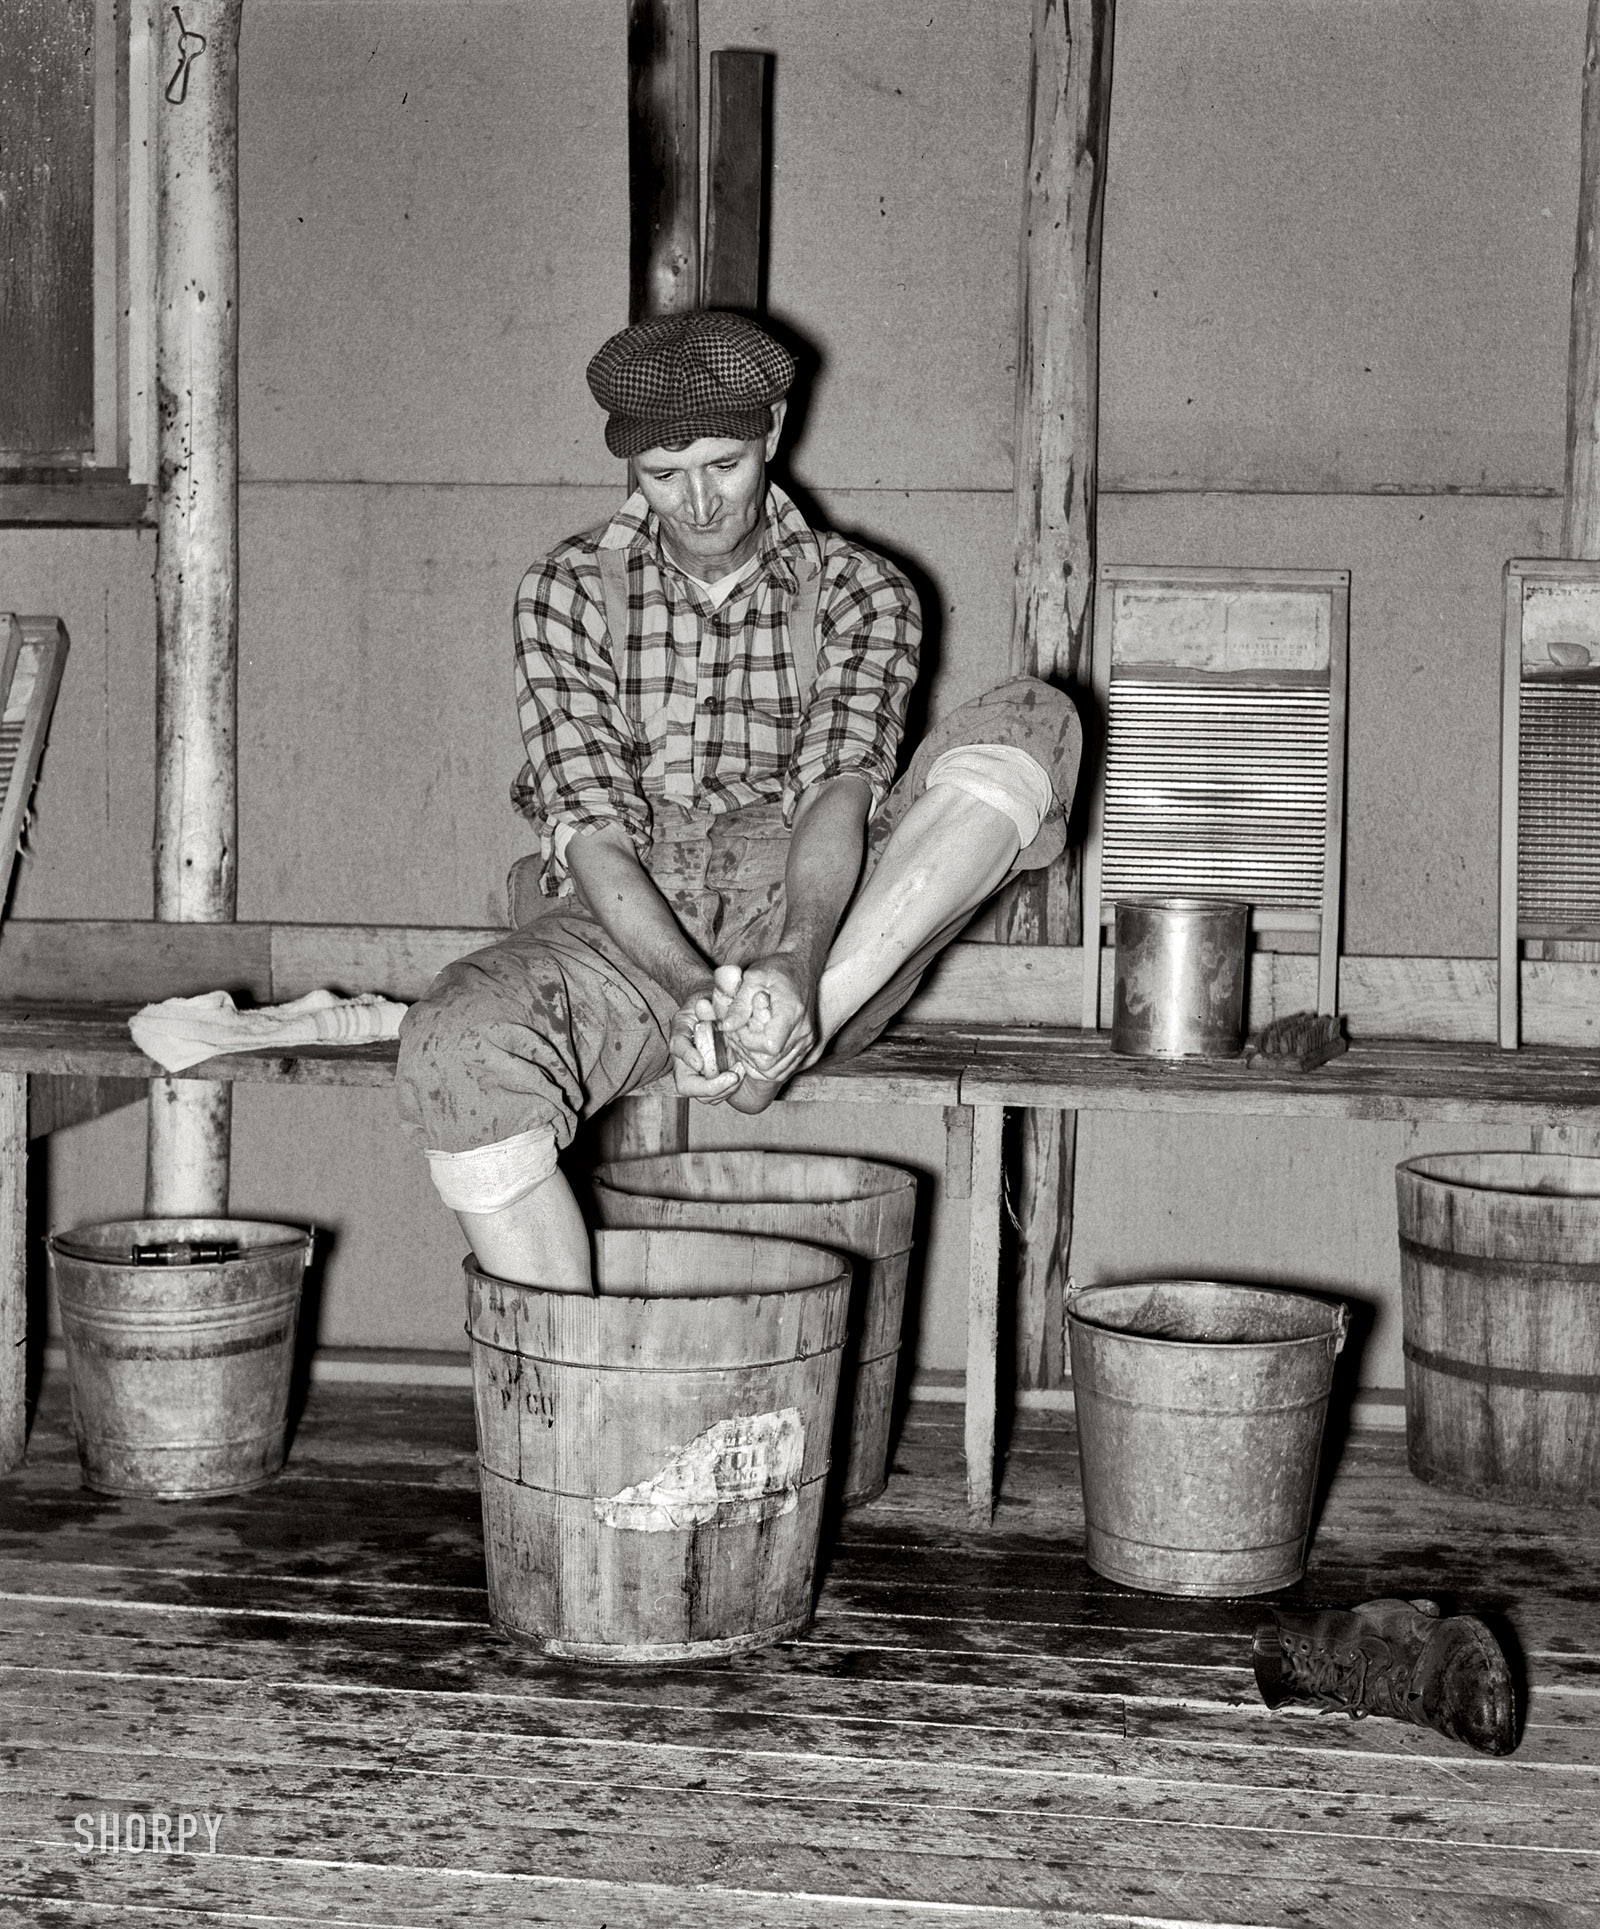 September 1937. "Camp near Effie, Minnesota. Lumberjack washing his feet." Medium format acetate negative by Russell Lee. View full size.